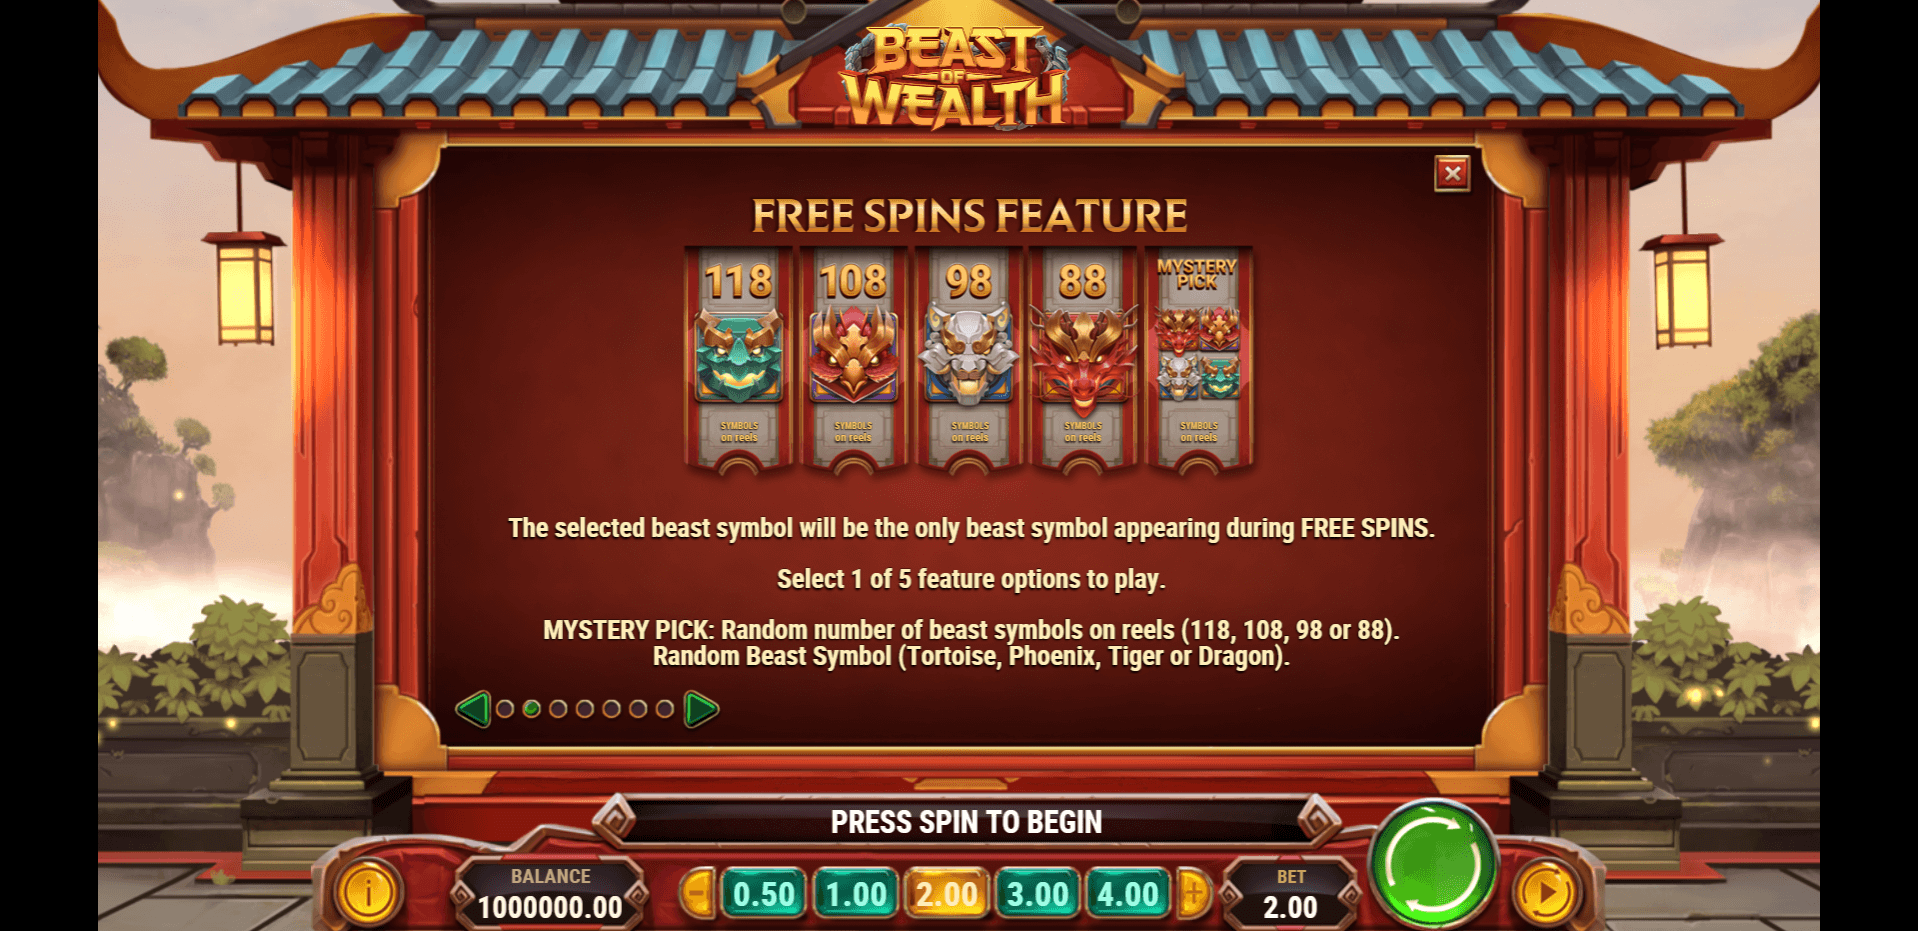 beast of wealth slot machine detail image 1